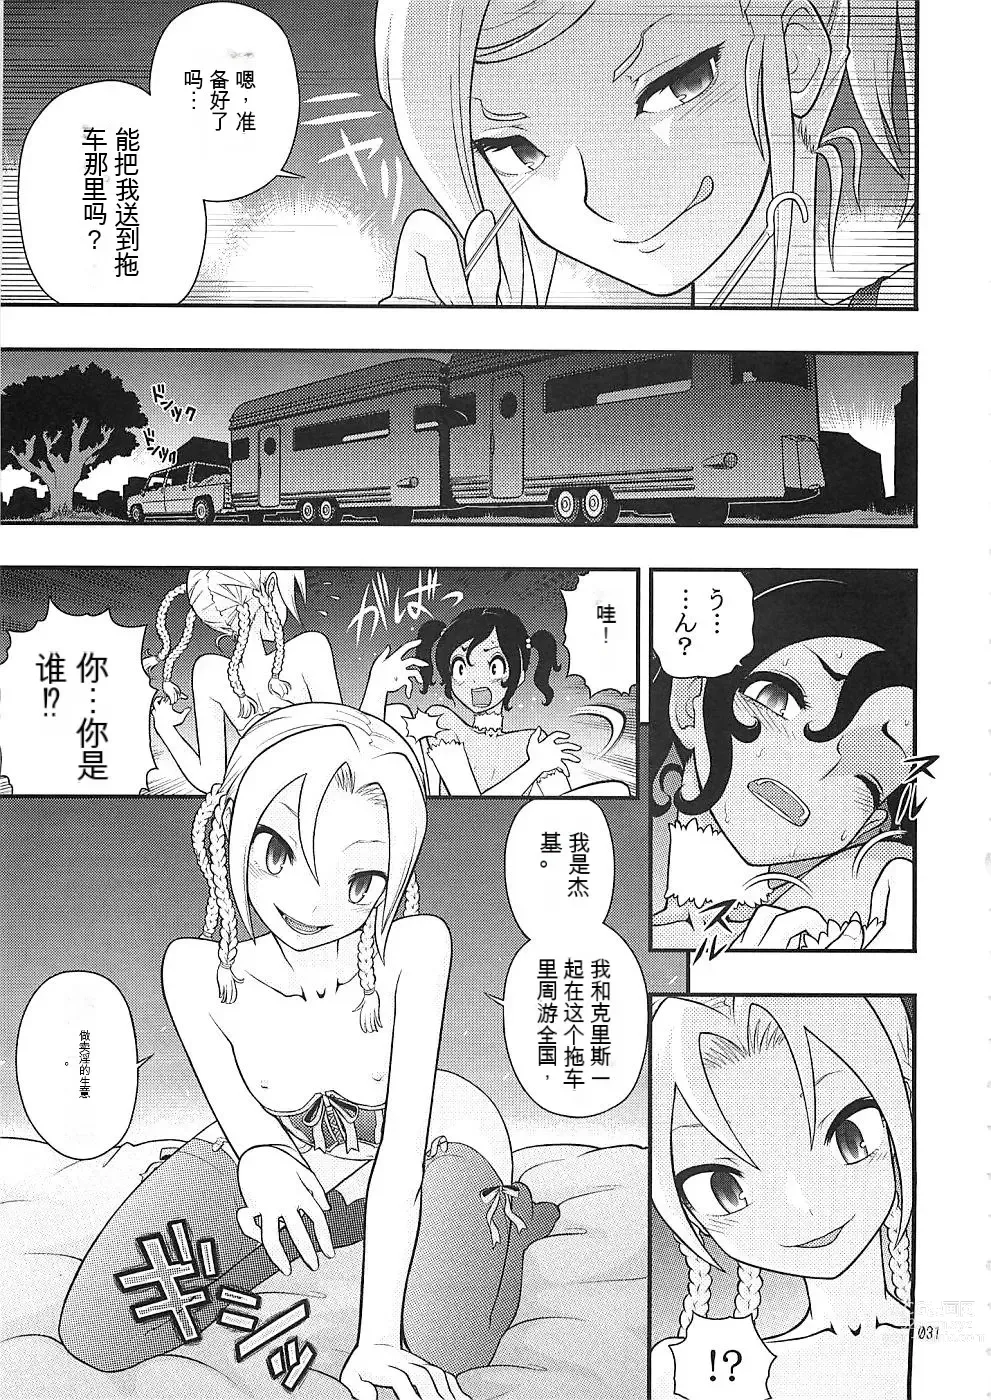 Page 3 of doujinshi Endless Summer Vacation